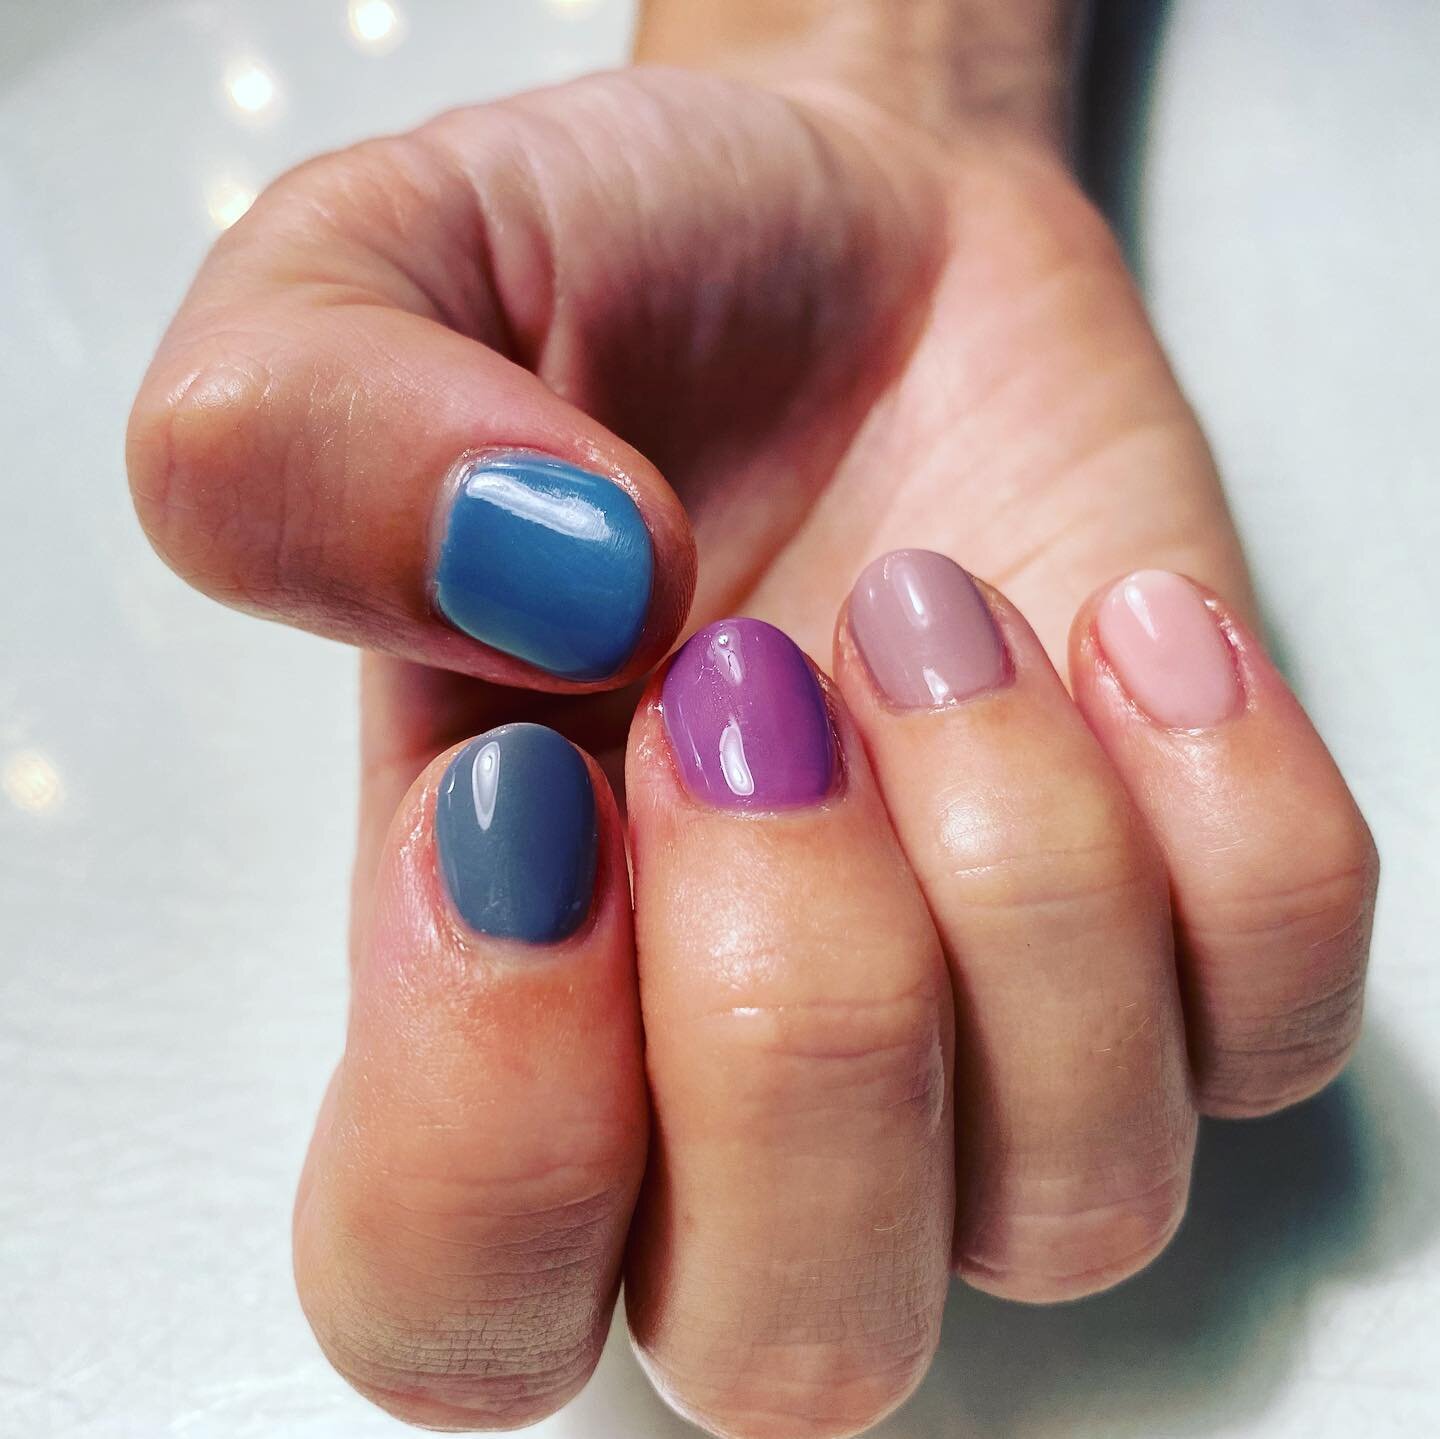 Are you feeling adventurous? Why not wear different shade on each nail
.
.
.
#nail #nailart #nailsofinstagram #manicure #nailstagram #naildesign #nailpolish #beauty #gelnails #gel #nailswag #nailstyle #instanails #naildesigns #inspire #nailsart #nail